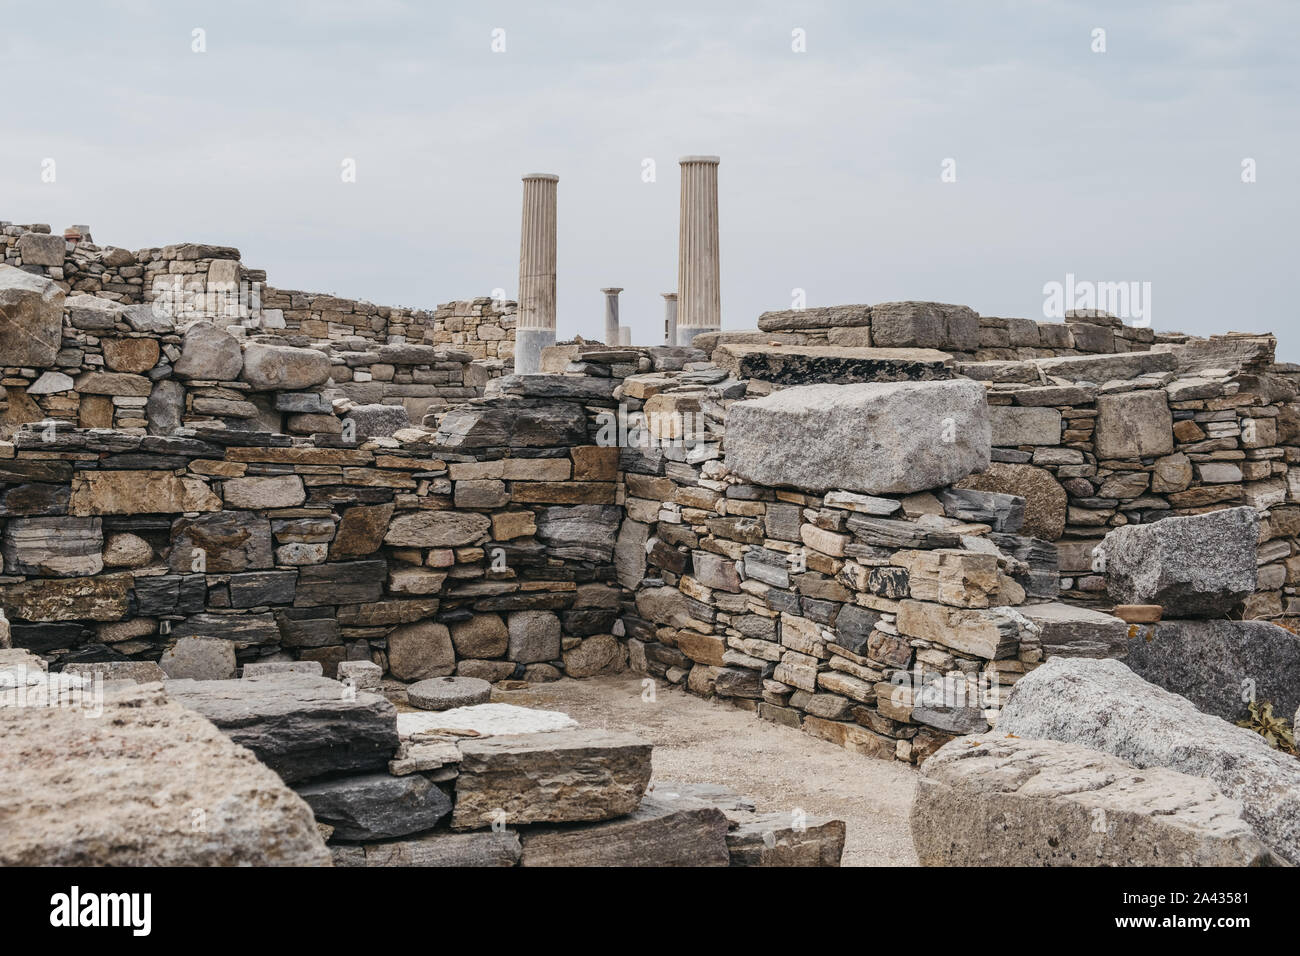 Ruins on the island of Delos, Greece, an archaeological site near Mykonos in the Aegean Sea Cyclades archipelago. Stock Photo